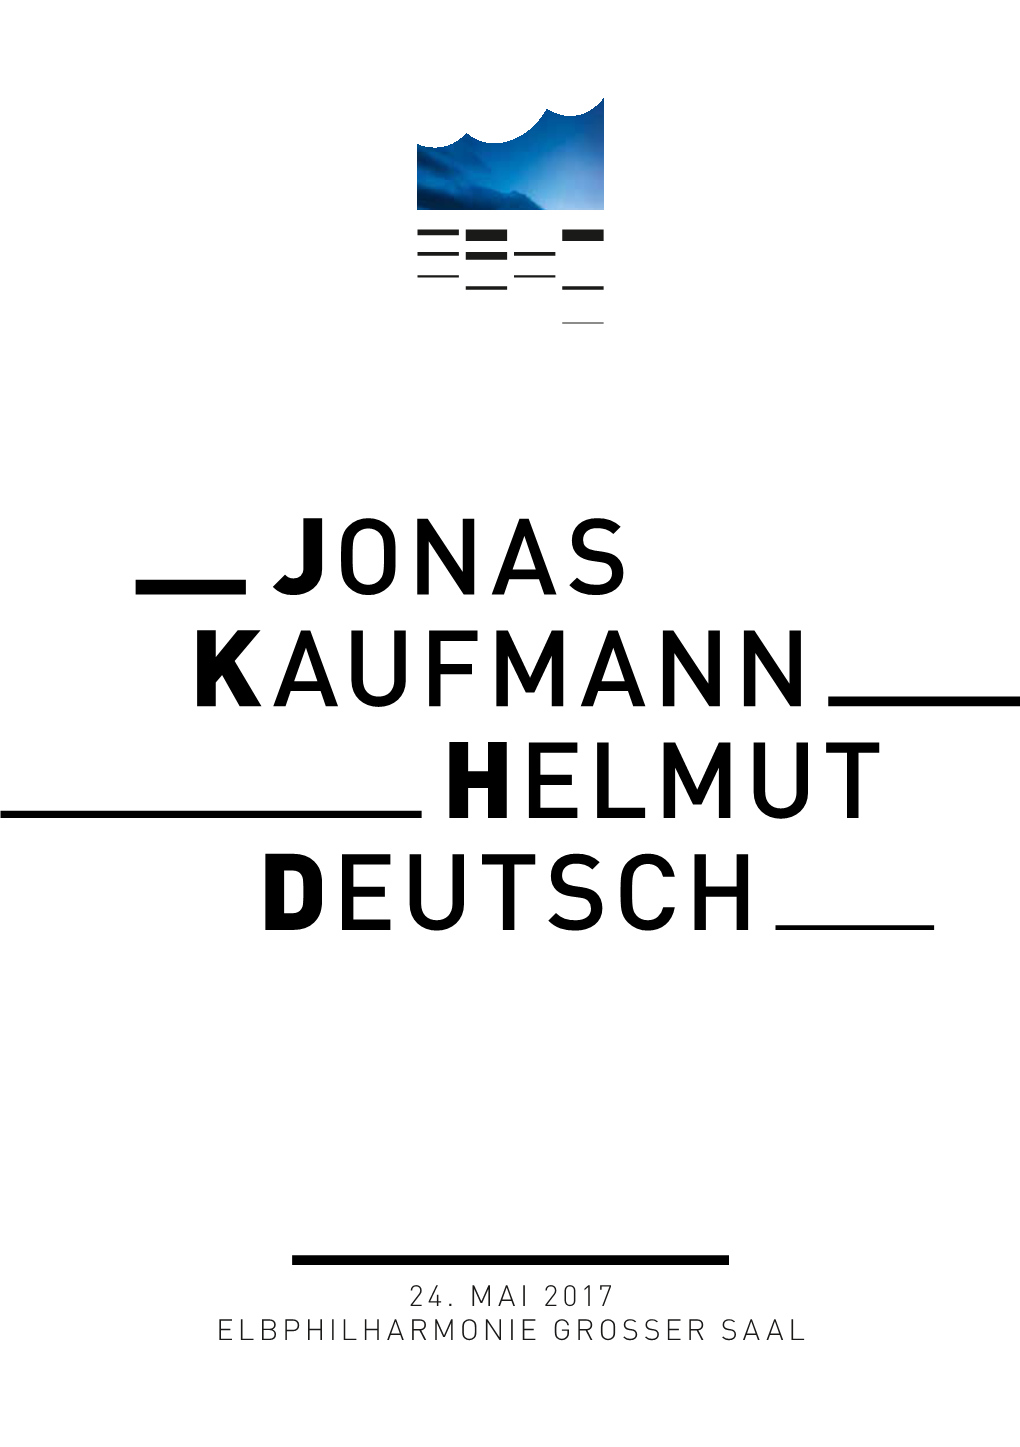 Jonas Kaufmann Helmut Deutsch